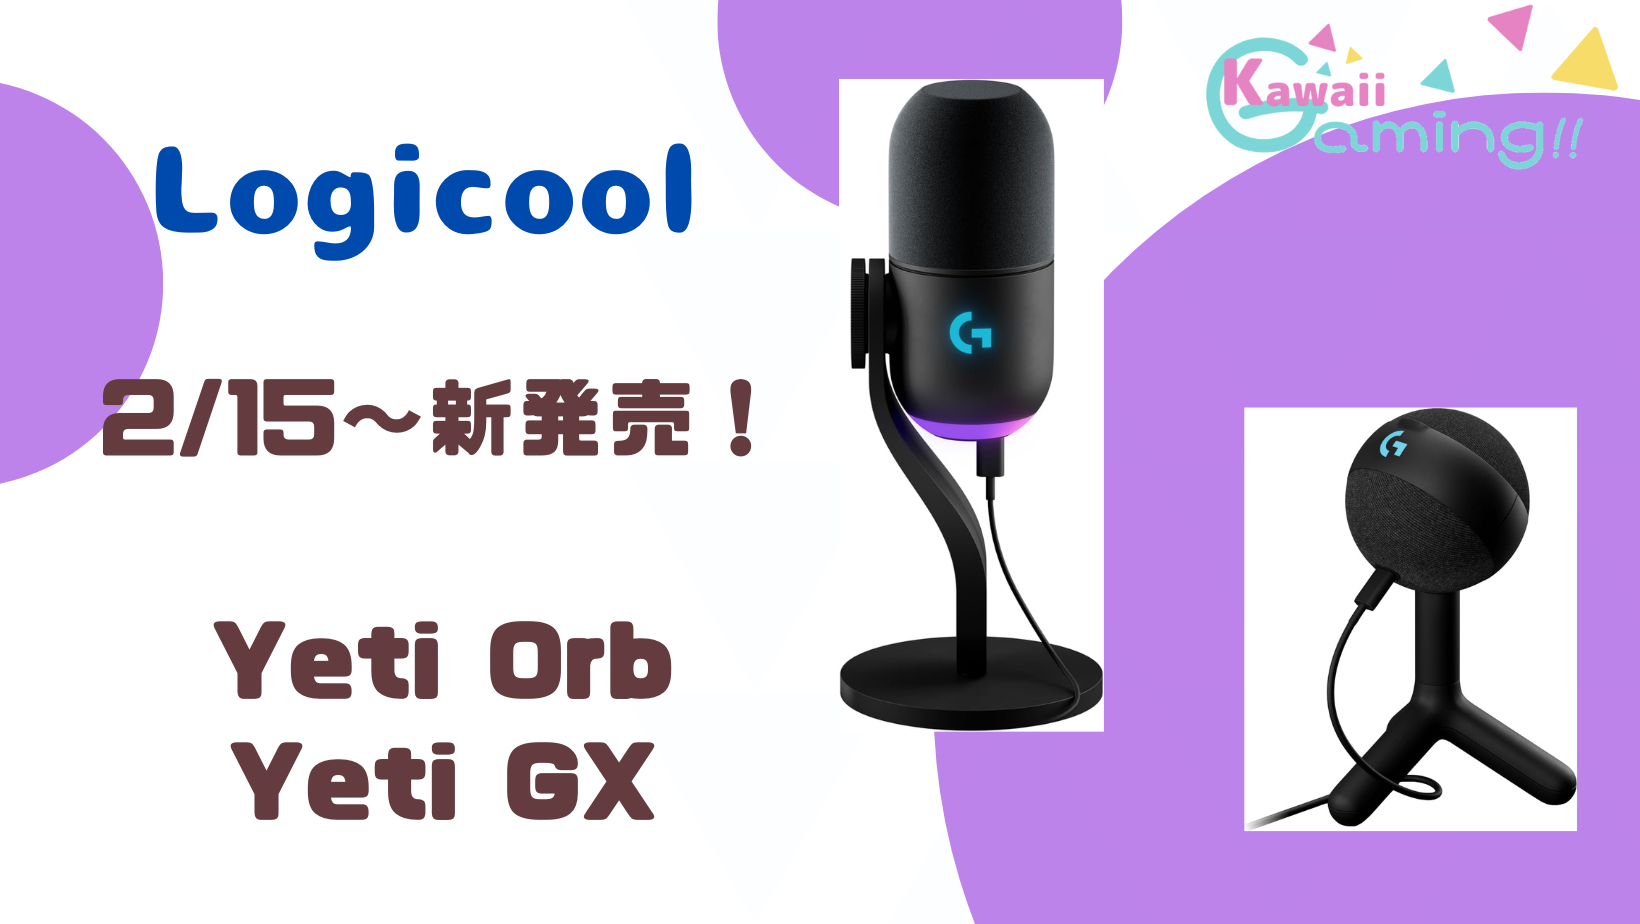 Logicool G ゲーマー＆配信者向けダイナミックマイク『Yeti GX』と丸くかわいいマイク『Yeti Orb』を発表！ 発売は2月15日 |  KAWAIIGAMING.TOKYO